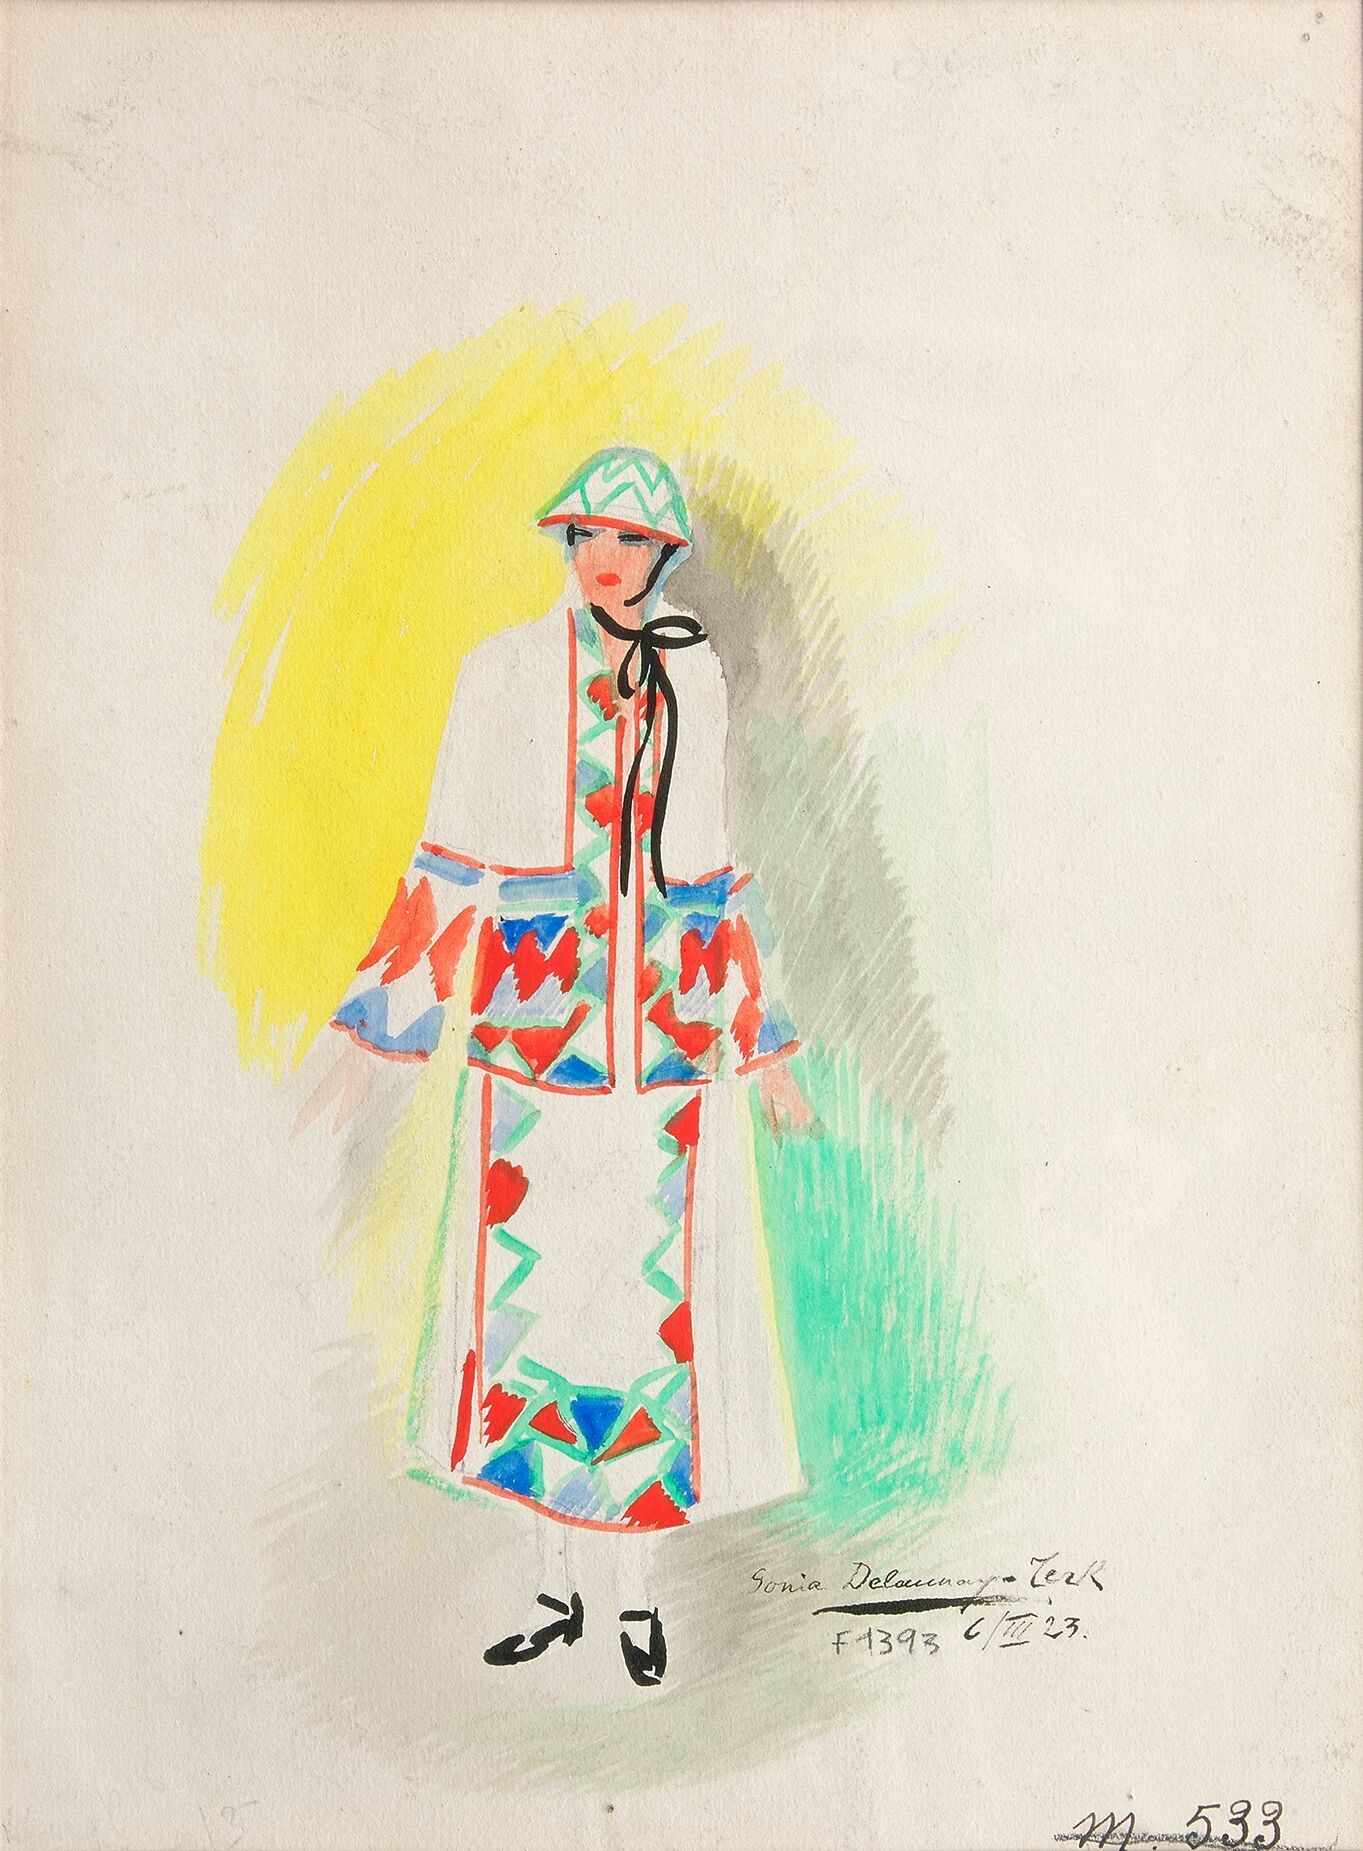 Null 索尼娅-德劳内 (1895-1979)

晚装，巴黎，1923年

水彩、水粉和墨水，右下方有签名、日期和编号F1393，右下方有划掉的数字 "m 5&hellip;